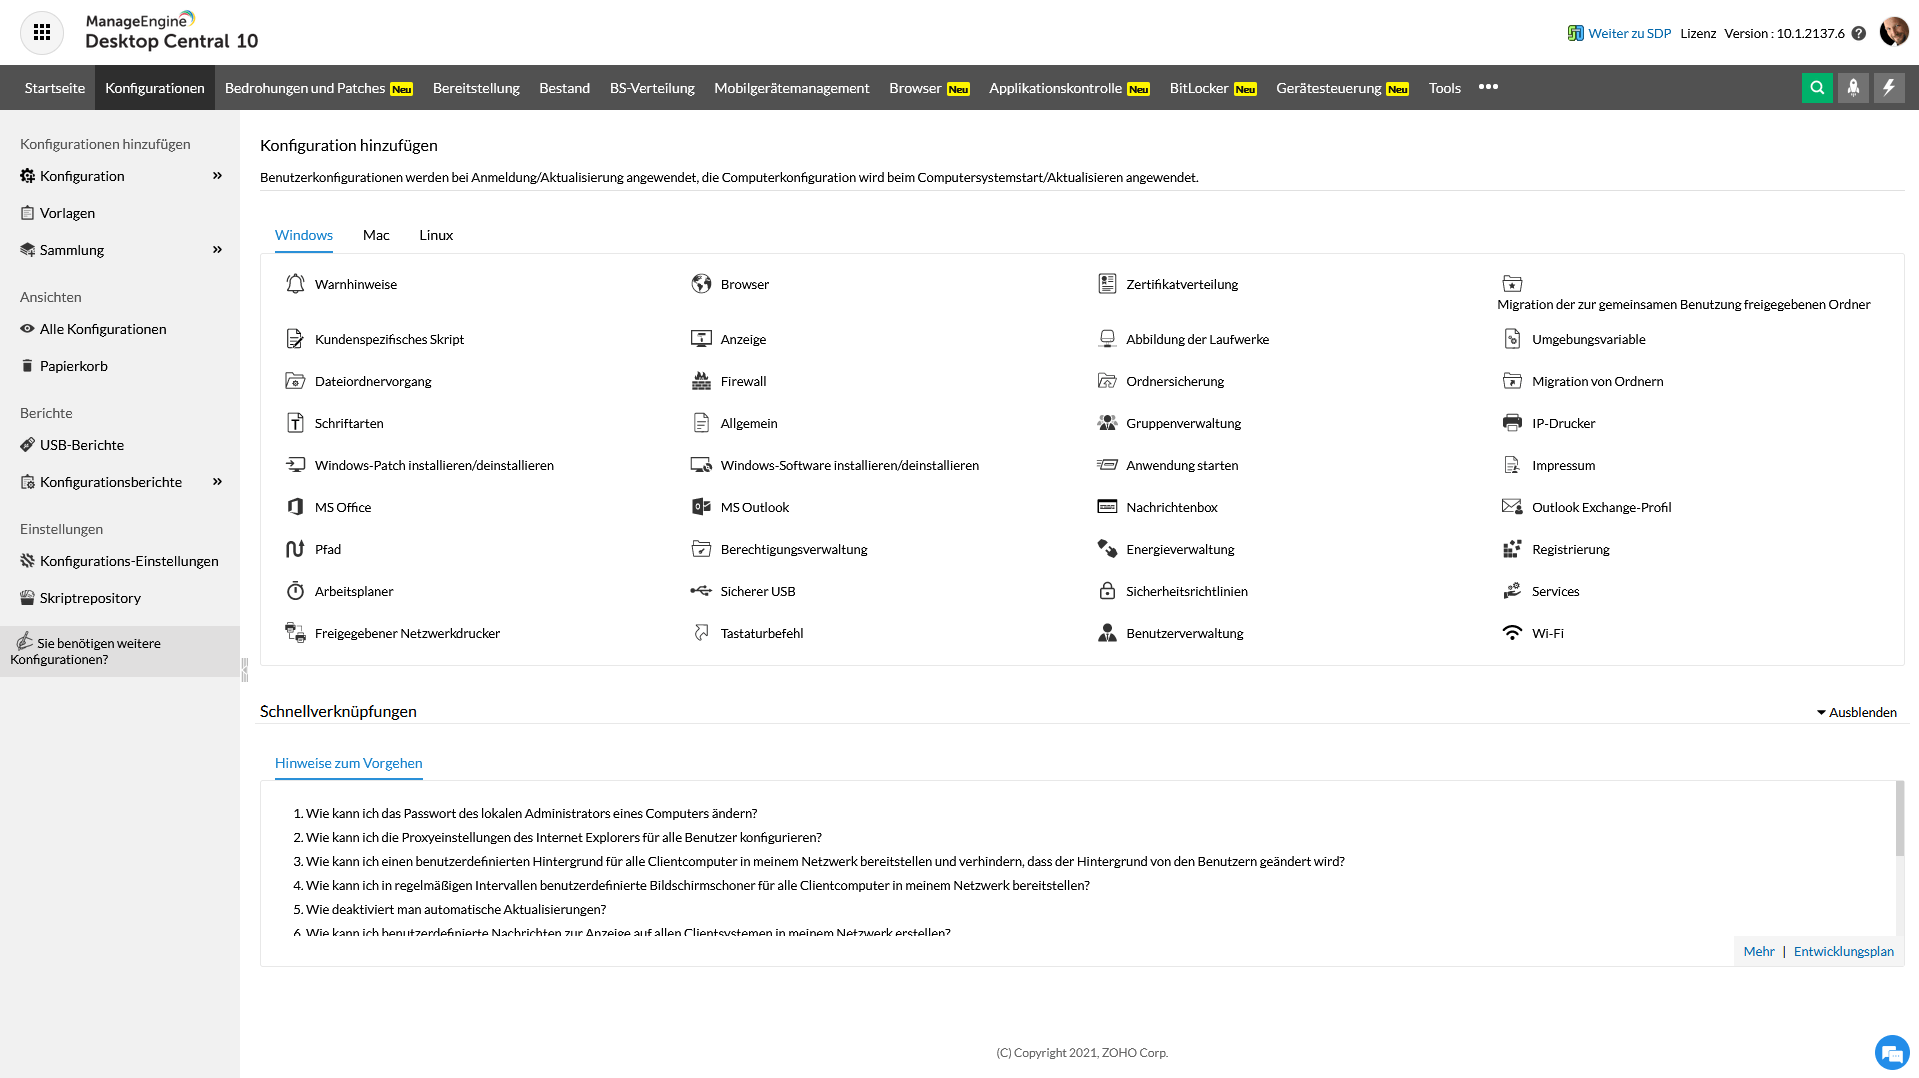 Screenshot Endpoint Central: Angebot an Konfigurationsvorlagen